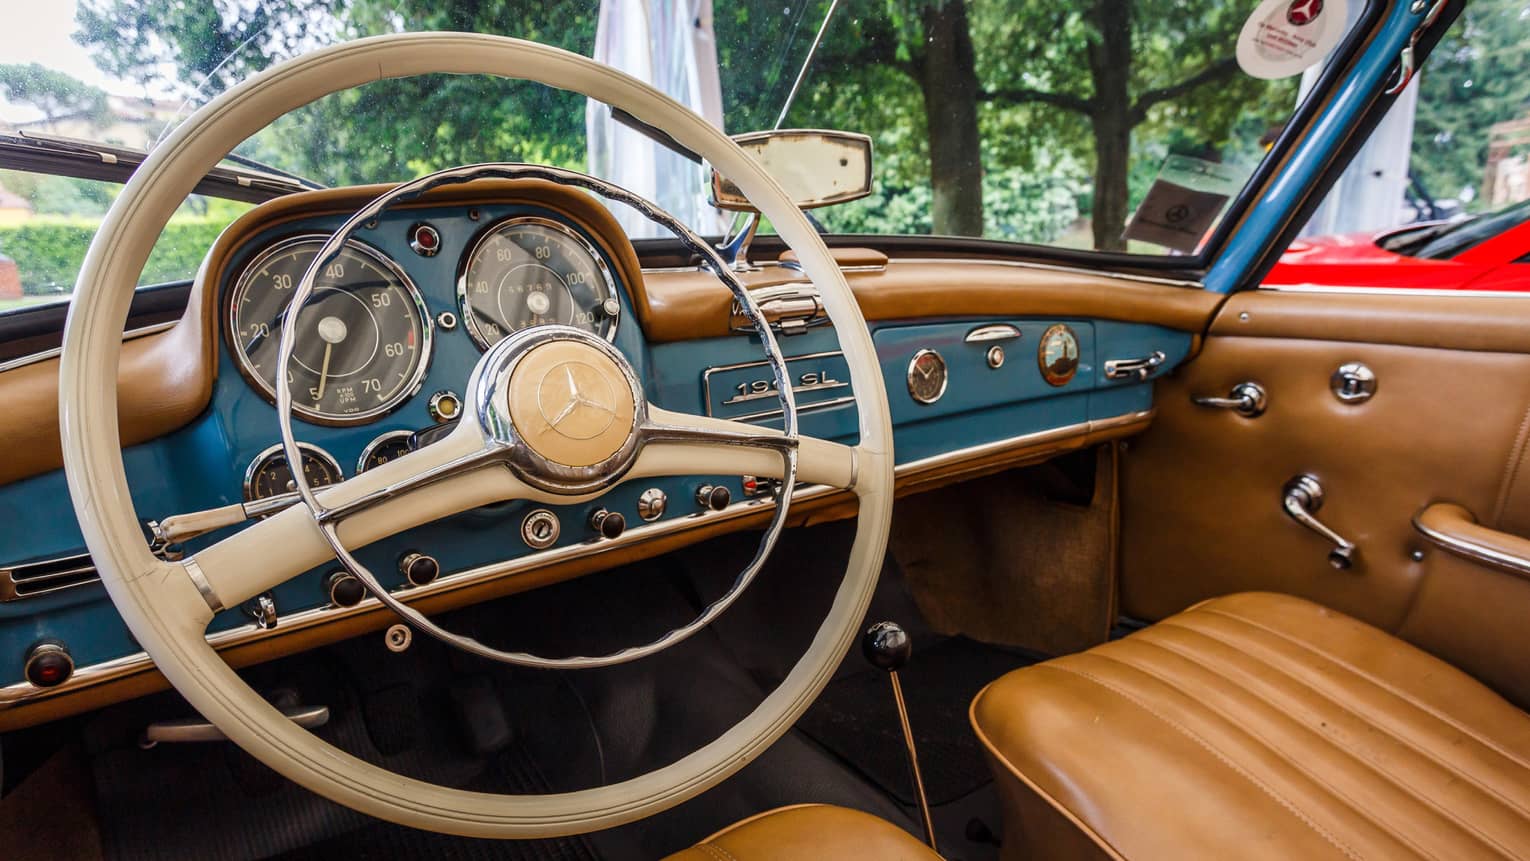 Wheel, dashboard, leather seats of classic luxury car